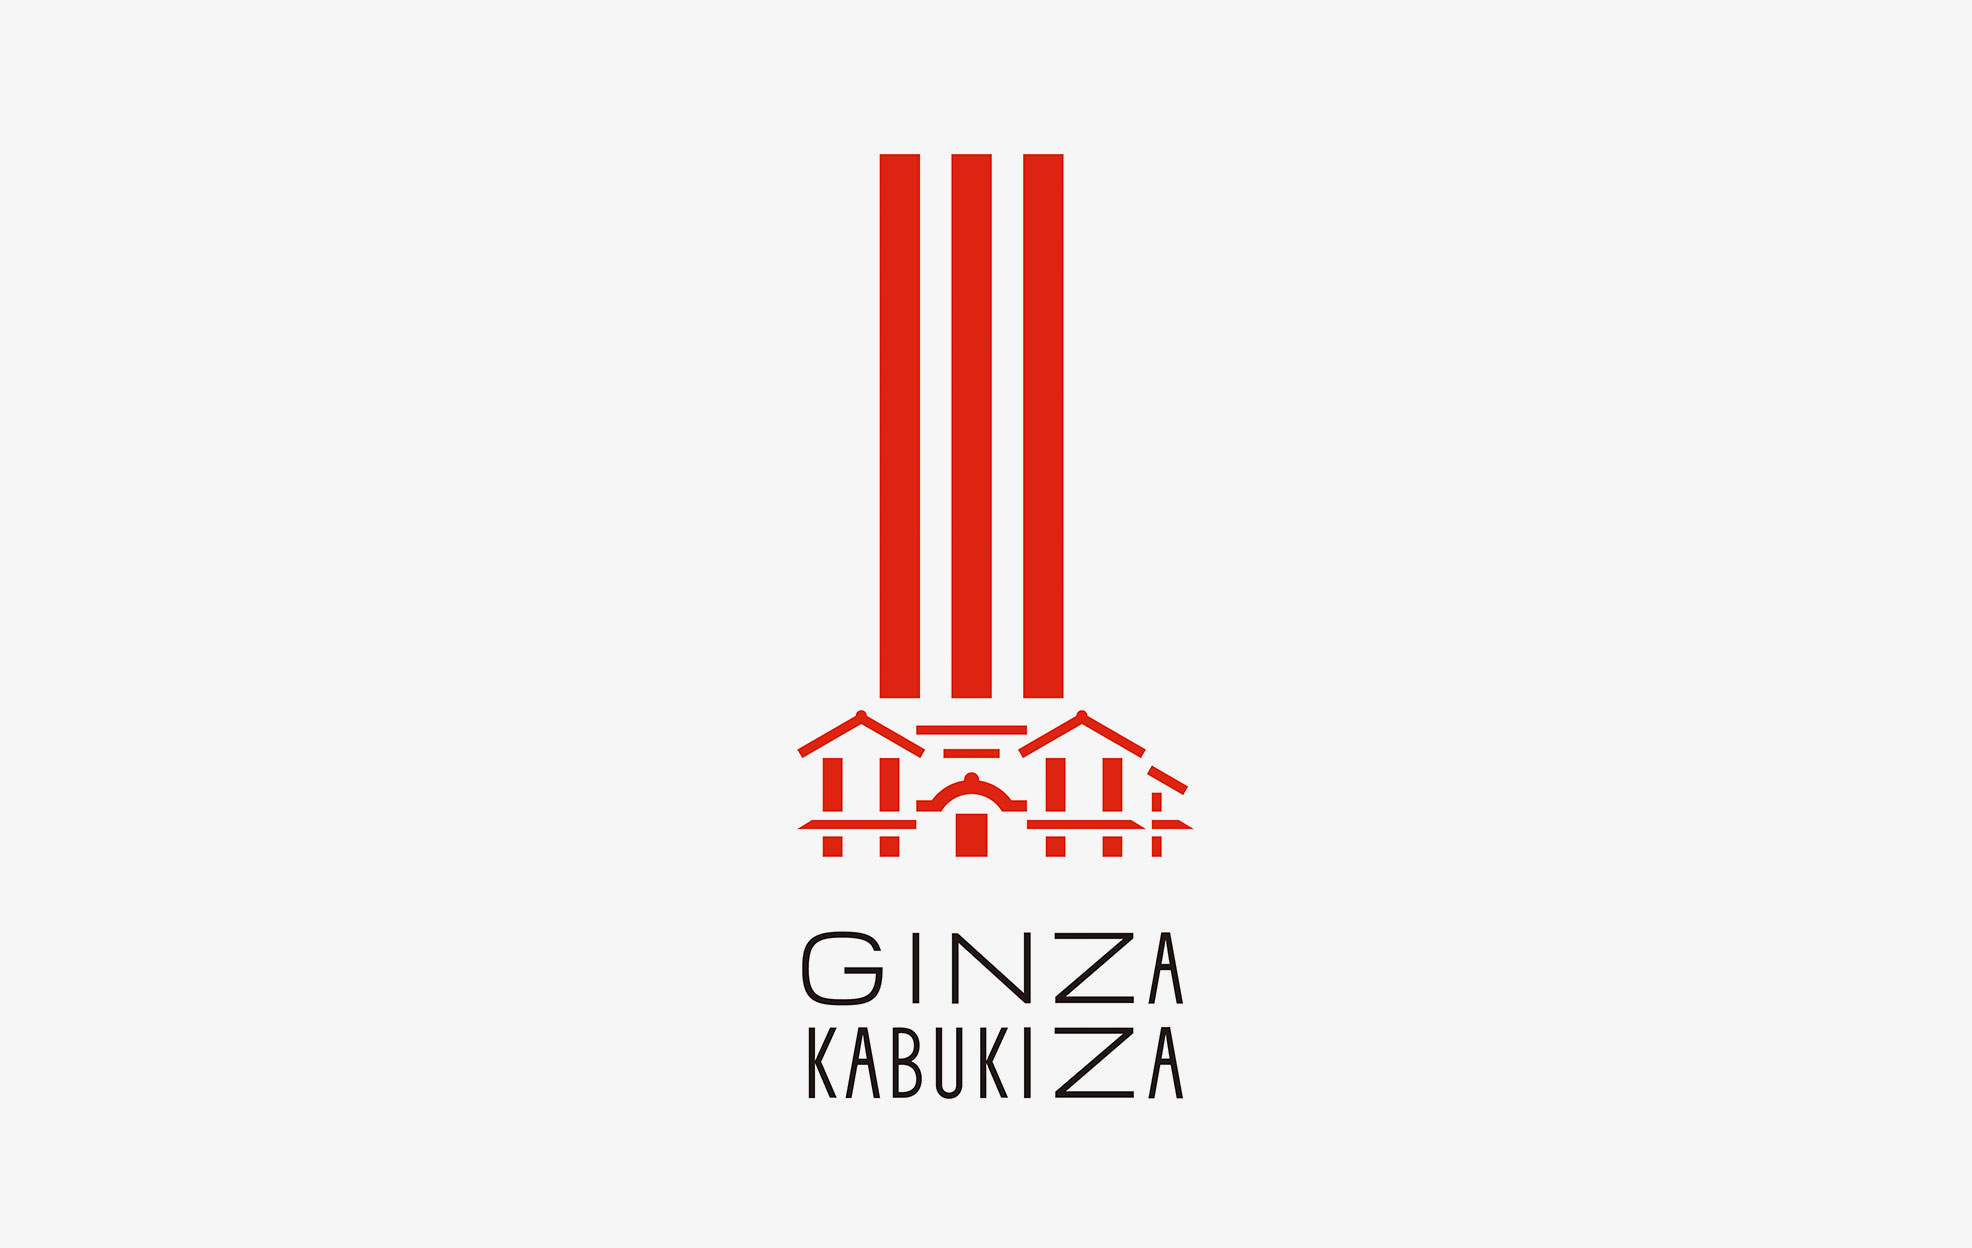 GINZA KABUKIZA